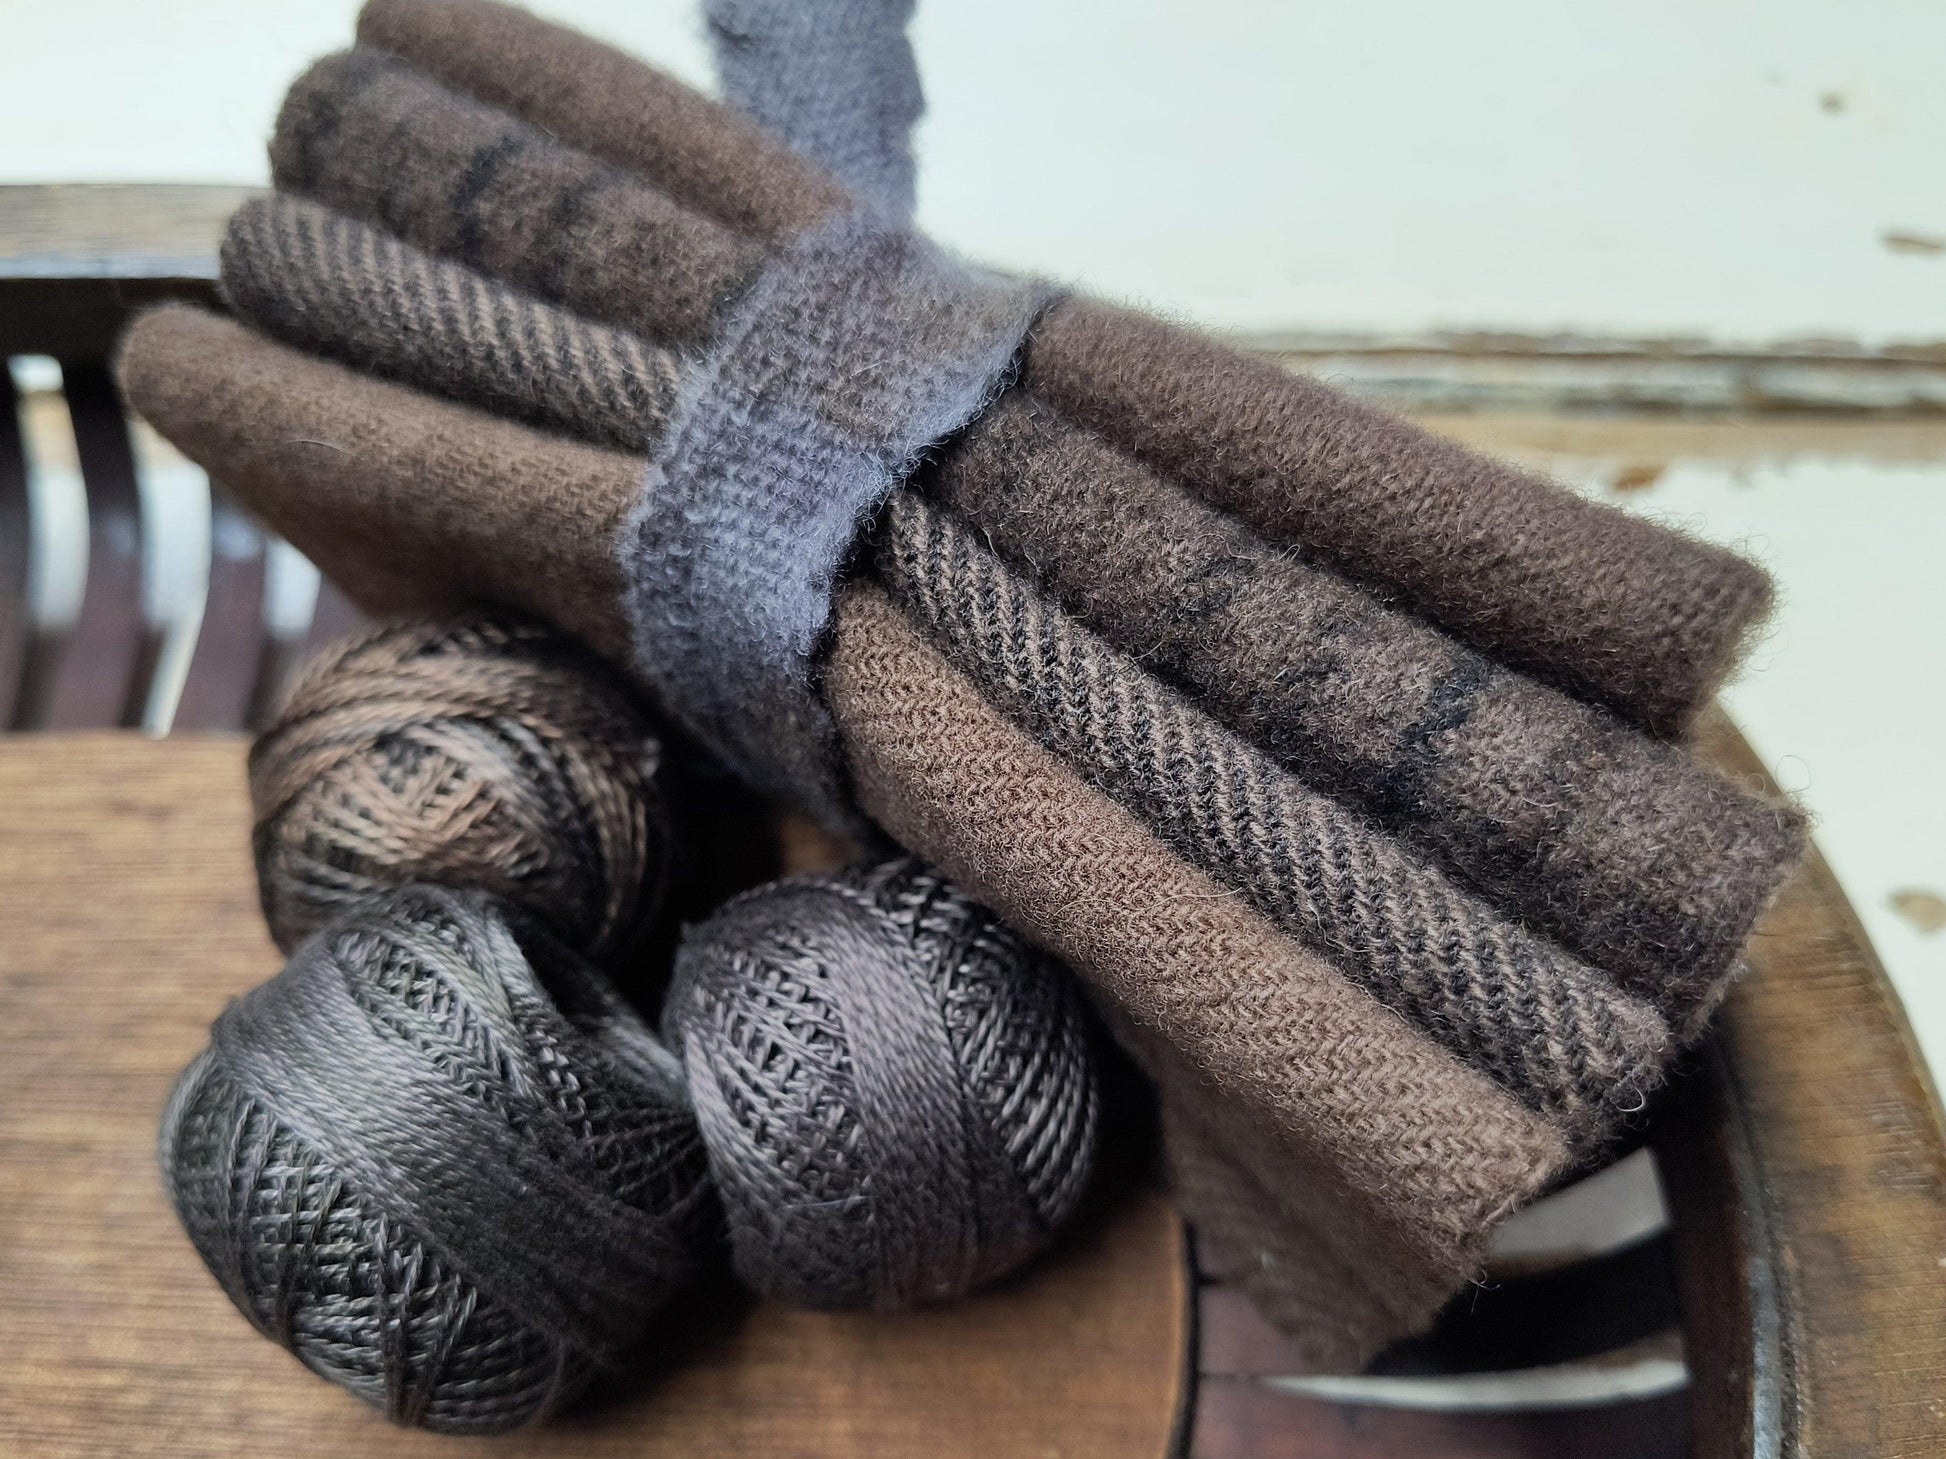 SEAL BROWN BUNDLE Hand Dyed Wool - All About Ewe Wool Shop